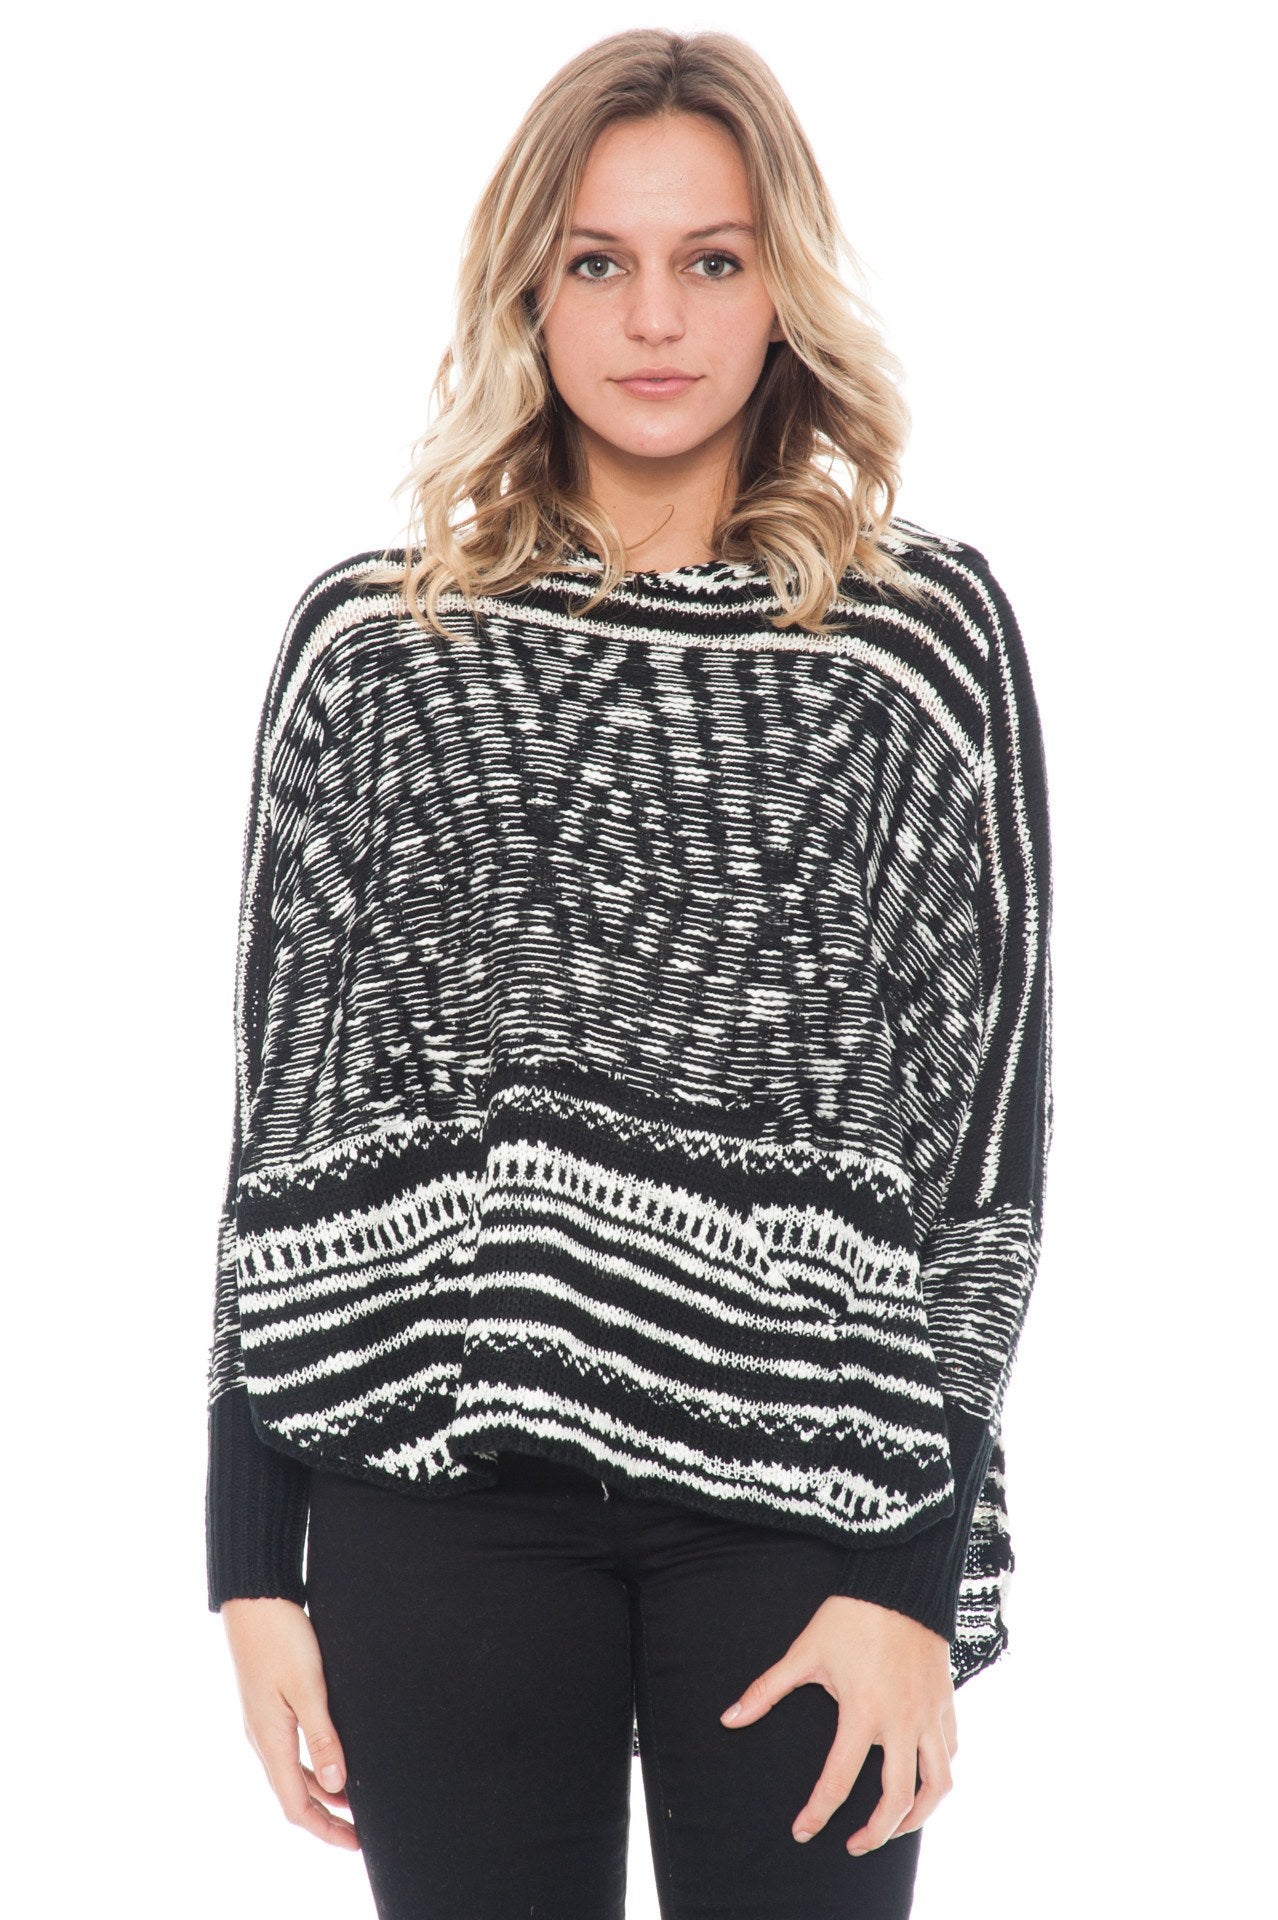 Sweater - Hooded Dolman Knit Top By Paper Crane (Final Sale)